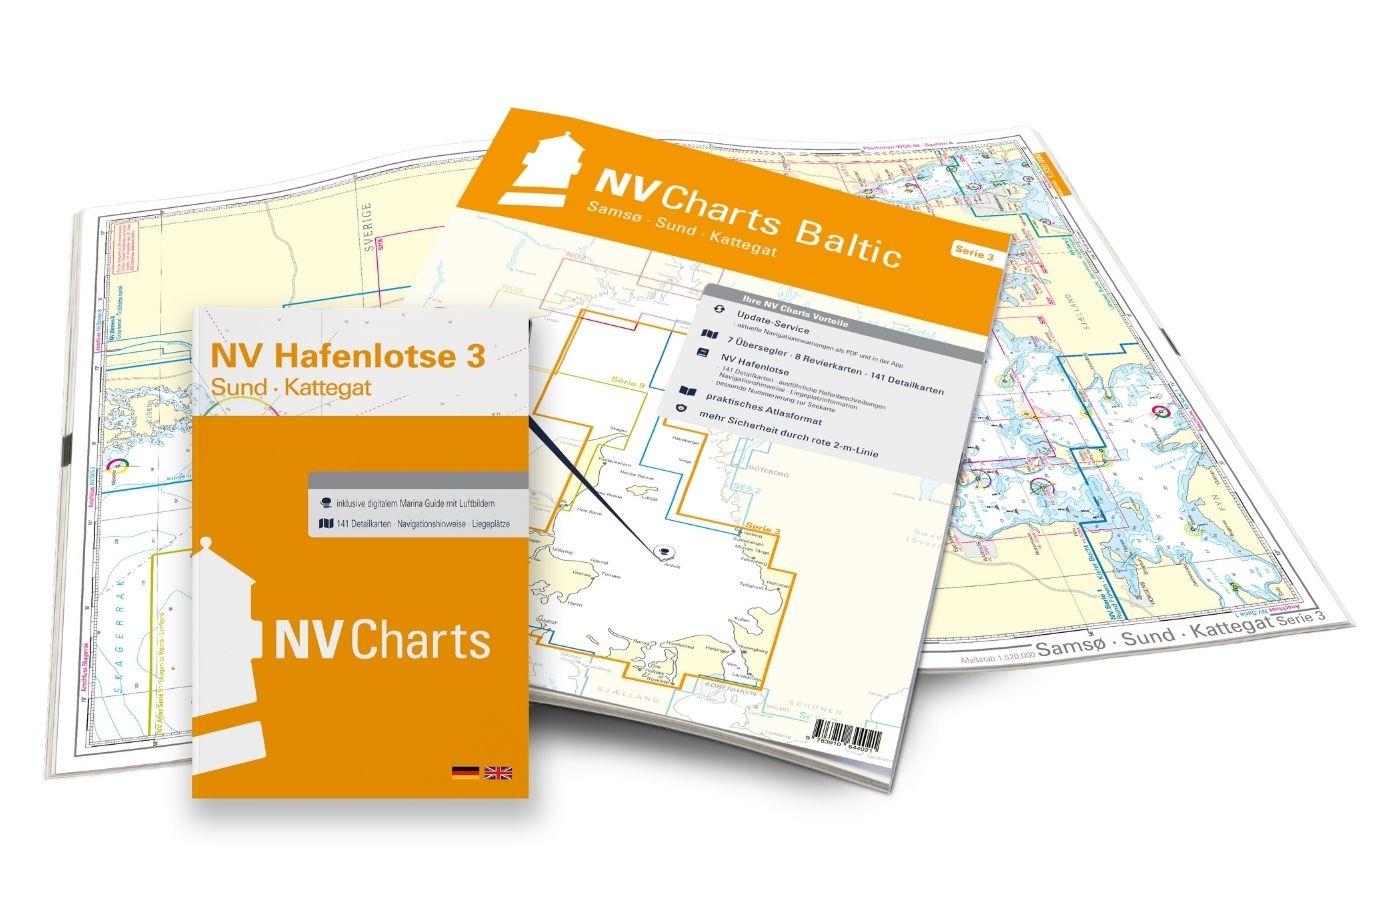 NV Charts Box North Germany to Norwegian border Region 1, 2, 3, 5.1, 5.2 